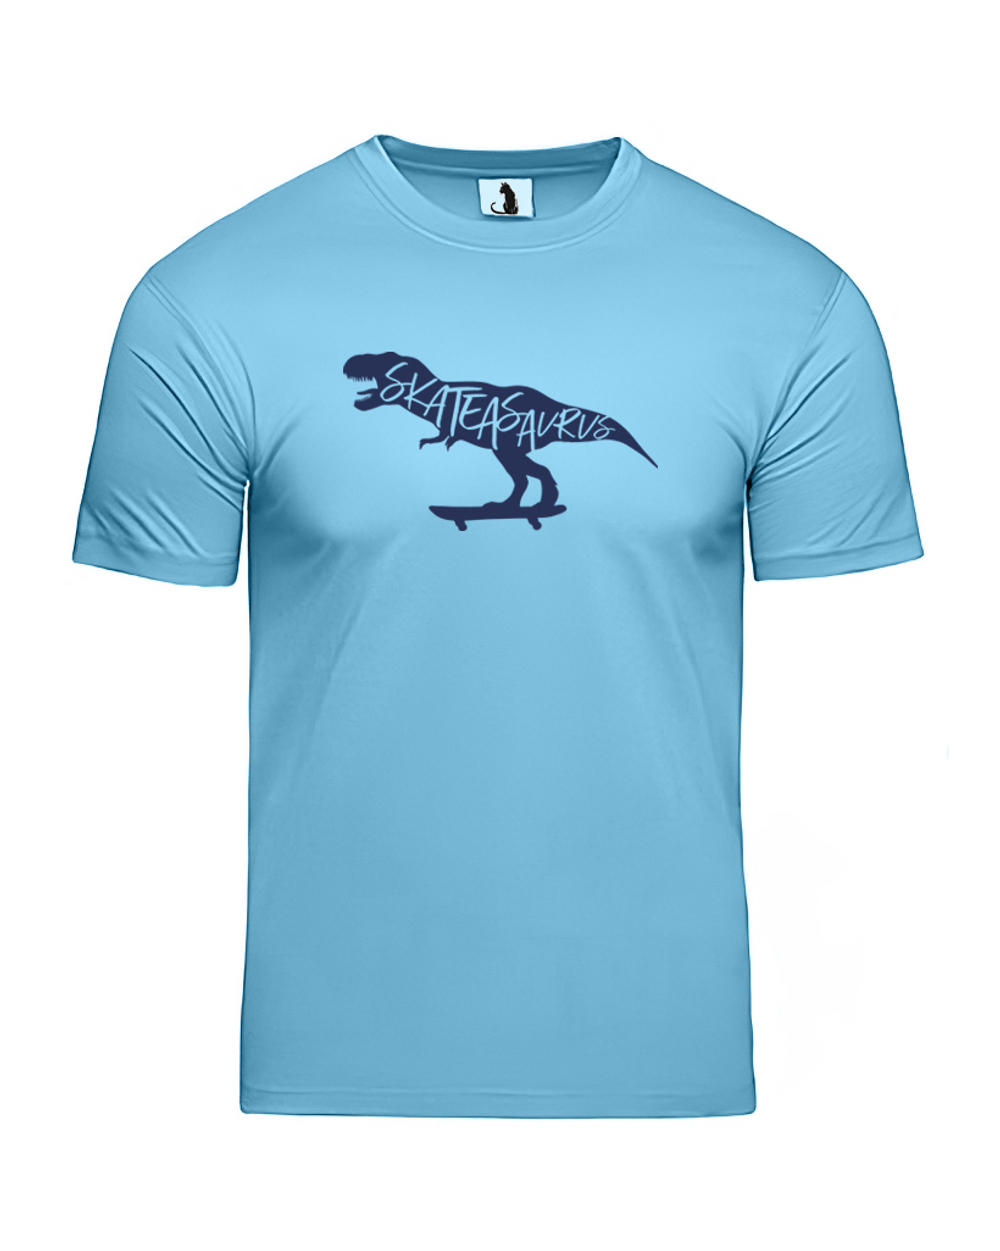 Футболка Skateasaurus unisex голубая с синим рисунком